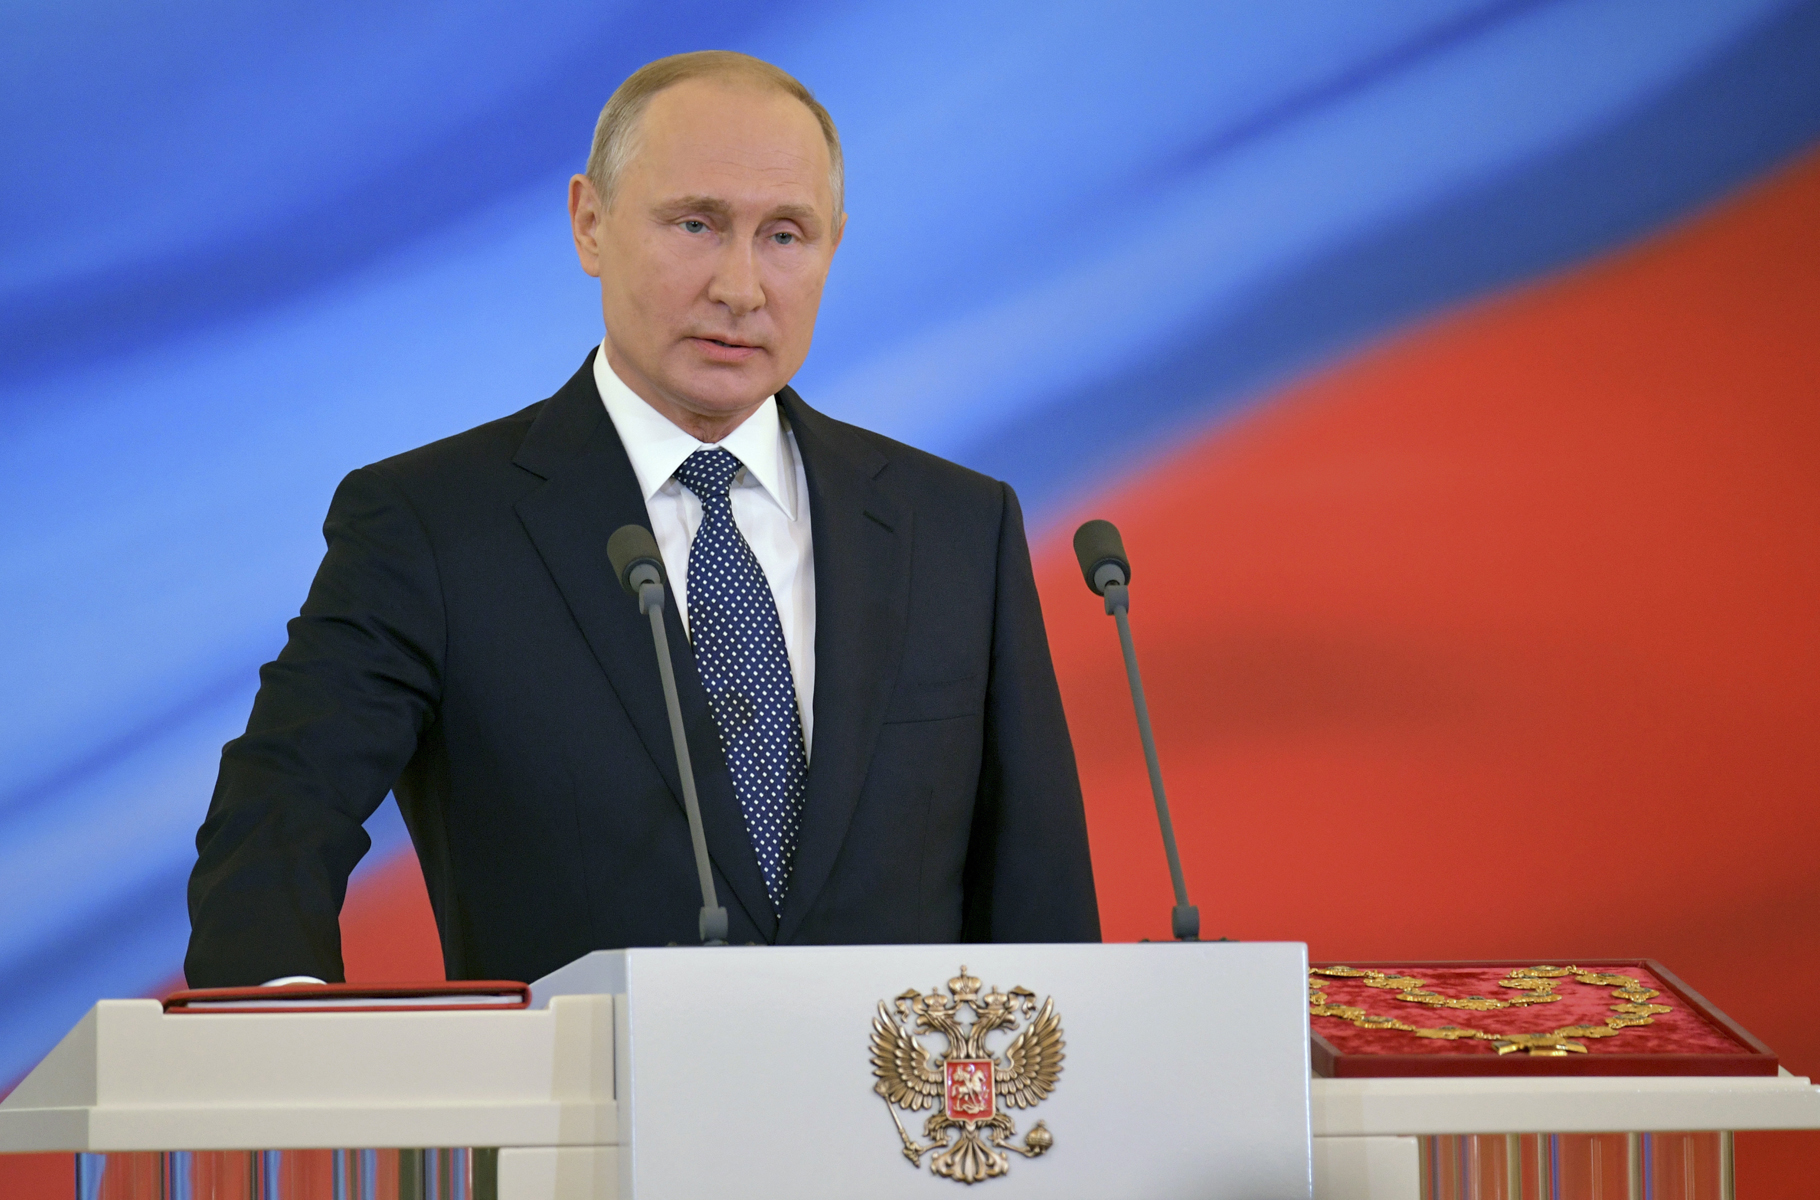  Putin asume presidencia de Rusia, promete reforma económica